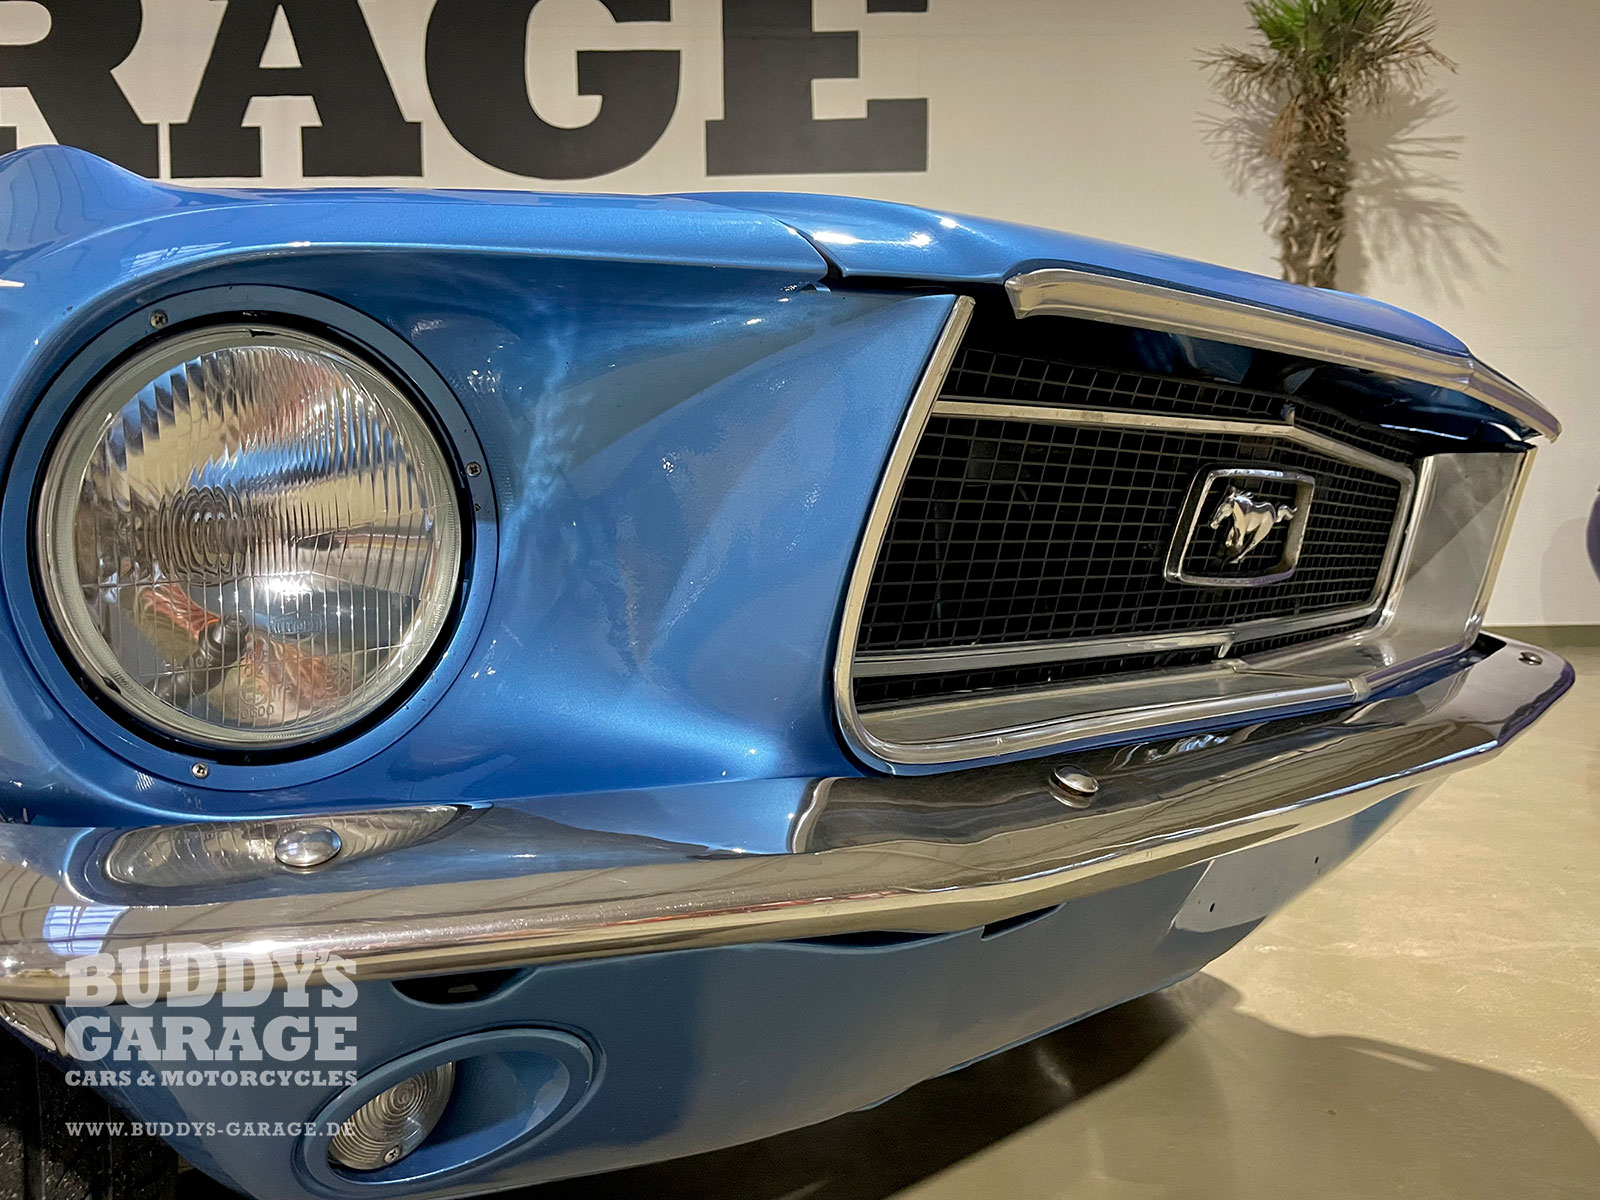 Ford Mustang J-Code Coupe 1968 | Buddy's Garage Bad Oeynhausen